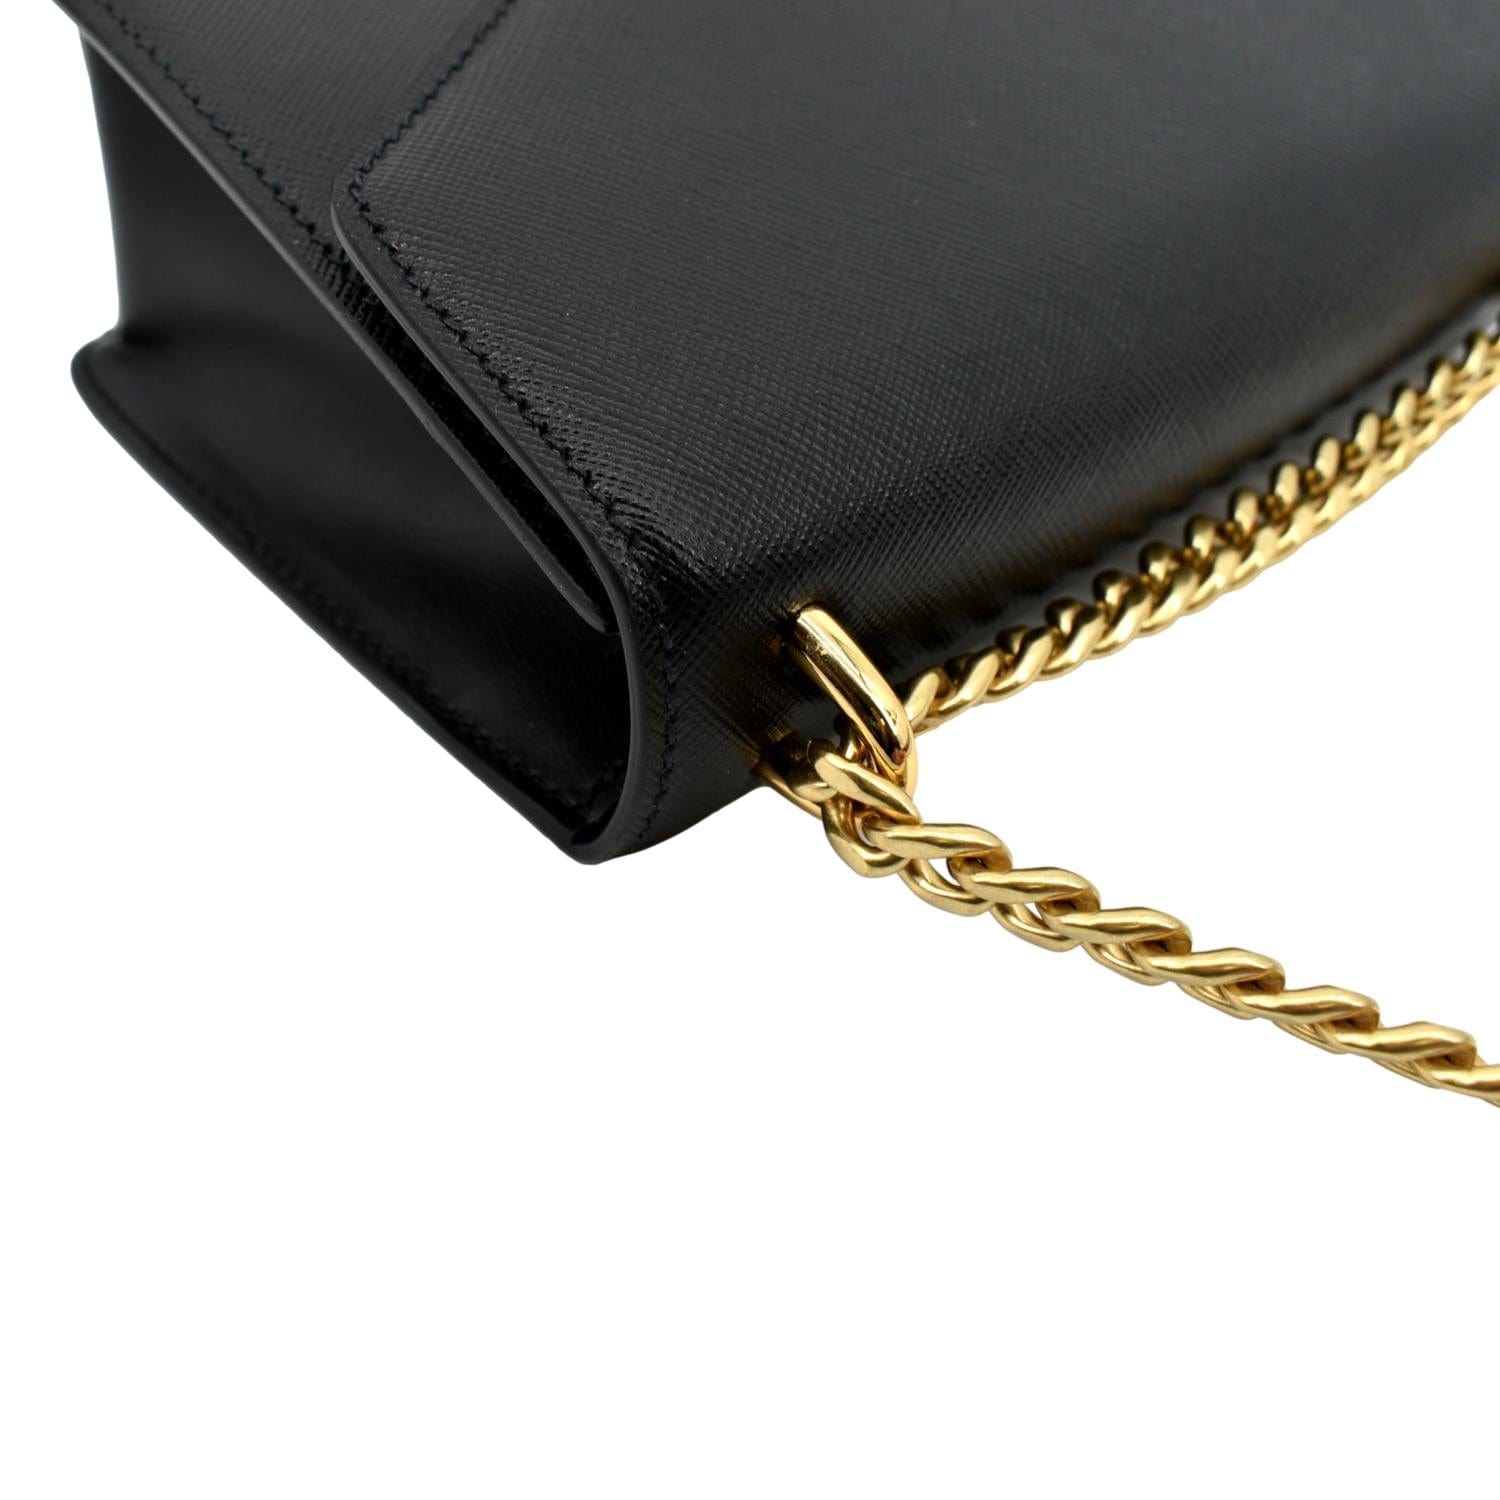  Prada Saffiano Lux Black Medium Satchel Handbag 1BA227